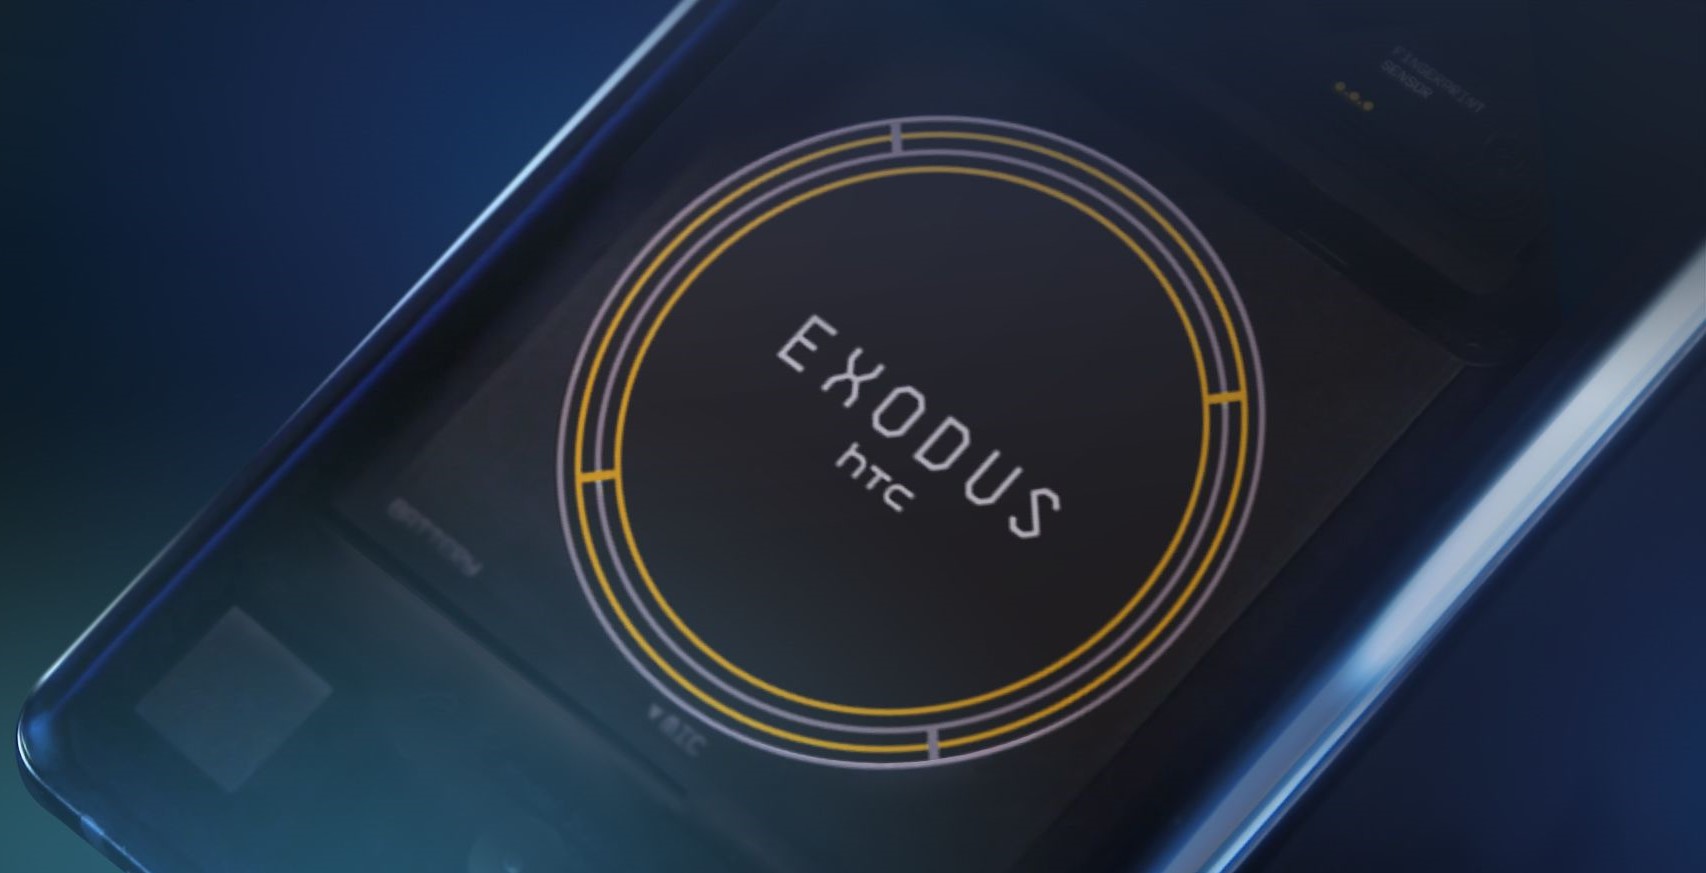 HTC Exodus 1 smartphone AndroidHits (2)